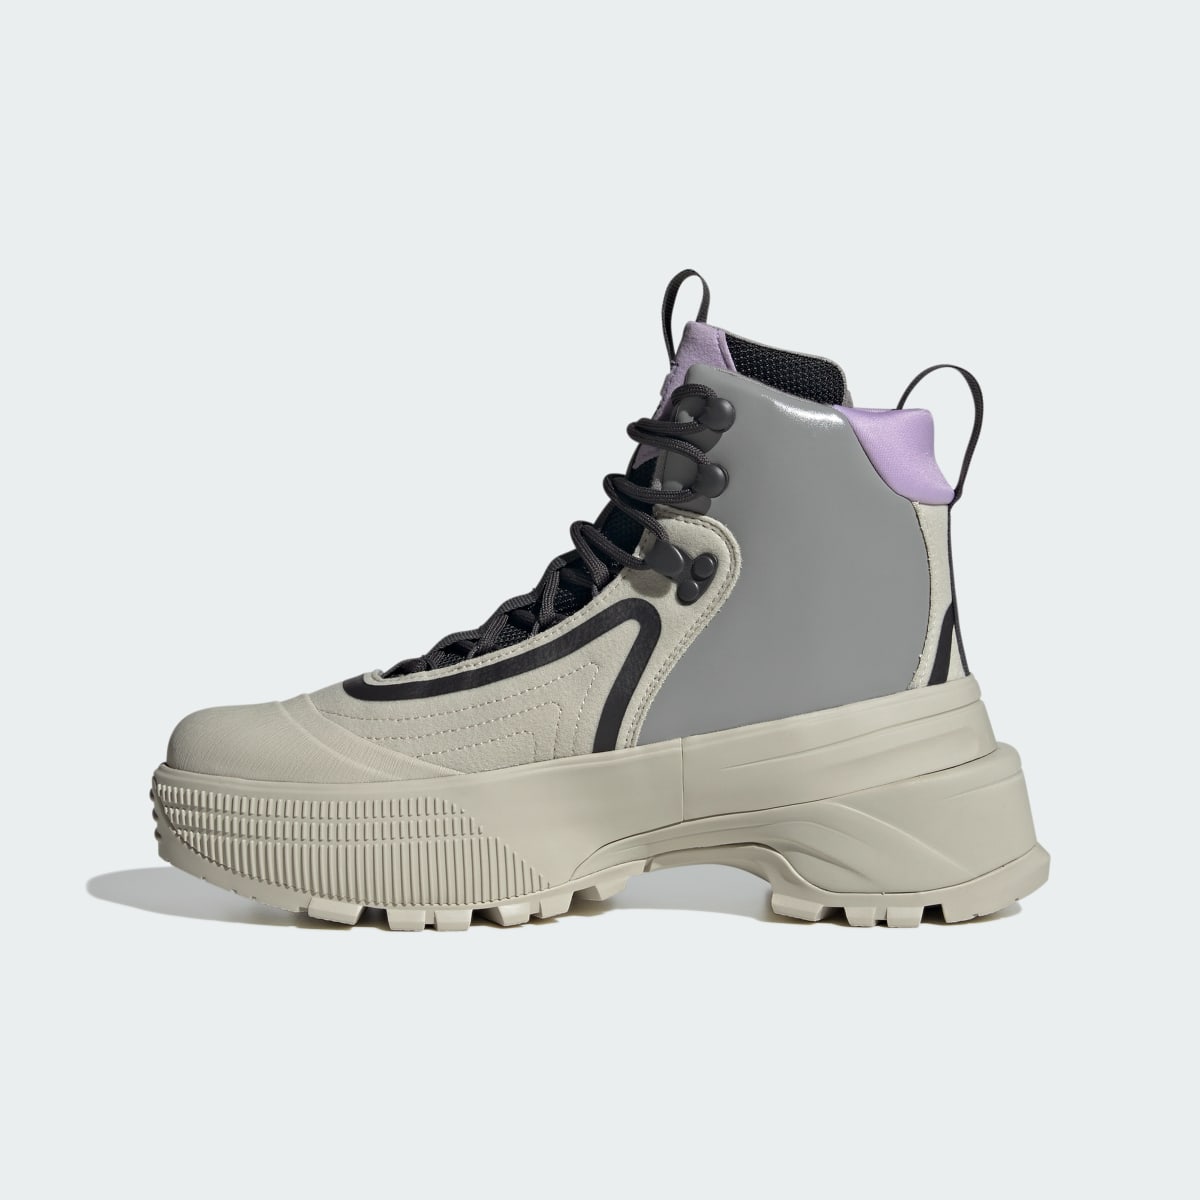 Adidas by Stella McCartney x Terrex Hiking Boots. 12